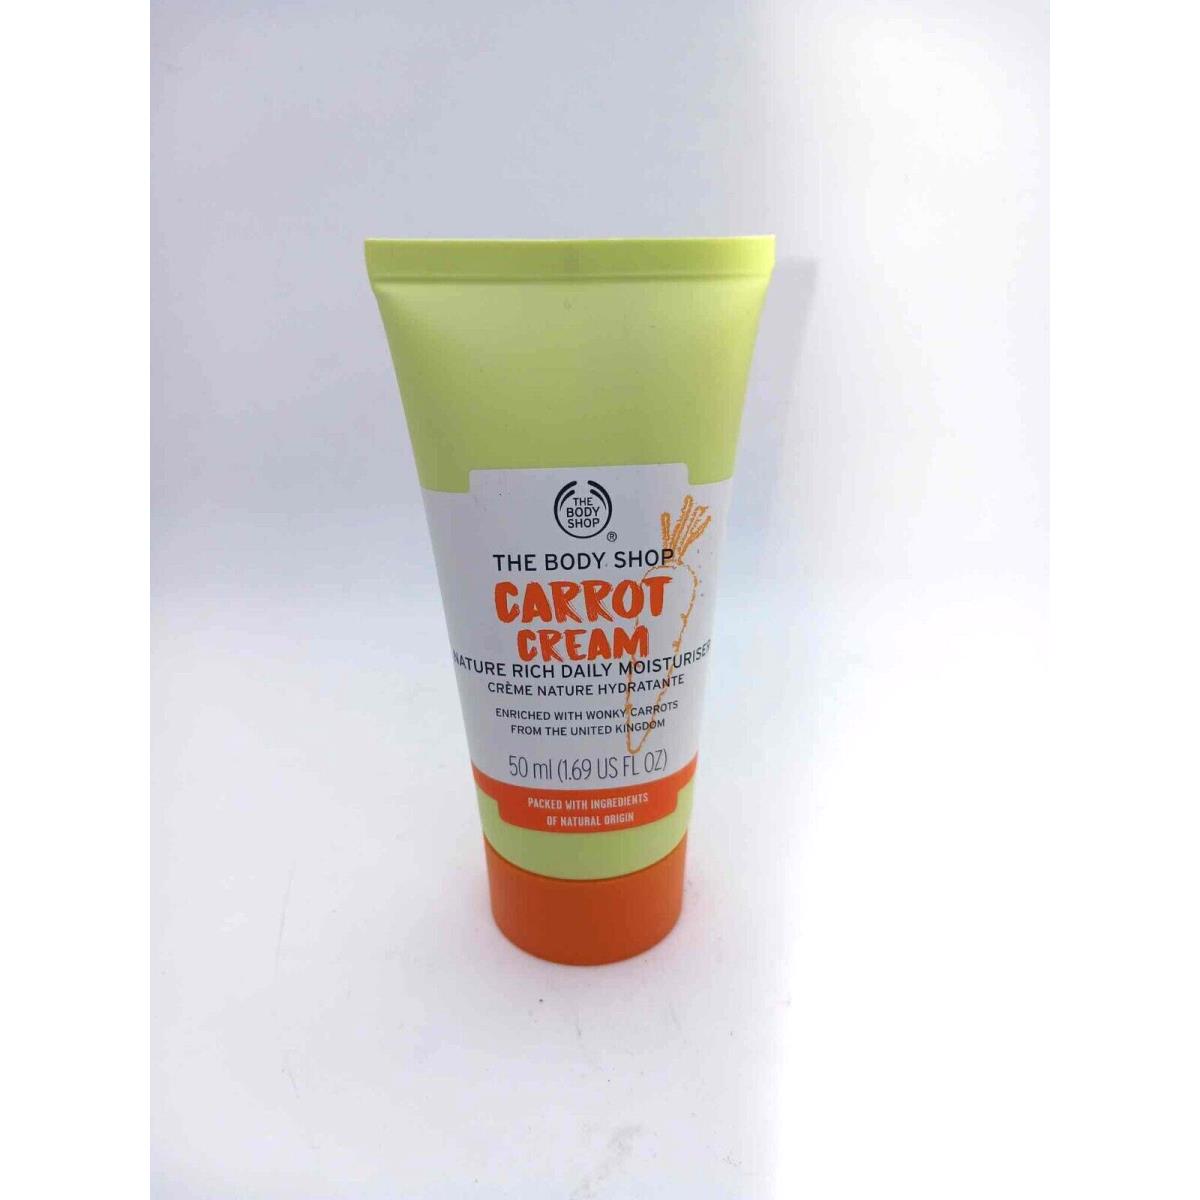 The Body Shop Carrot Cream Nature Rich Daily Moisturiser Cream